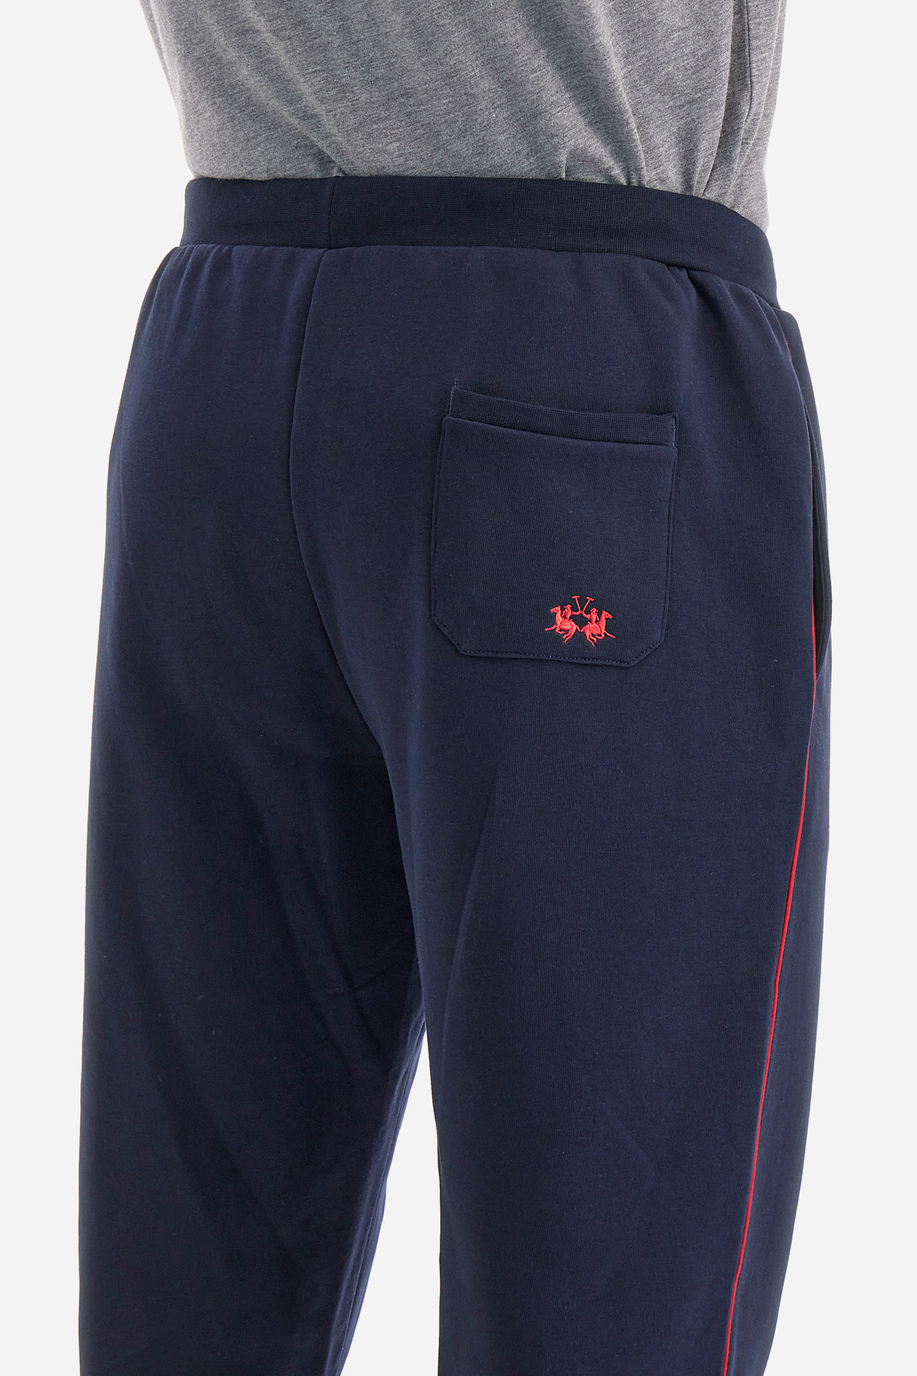 Jogging trousers in a regular fit - Walwin | La Martina - Official Online Shop